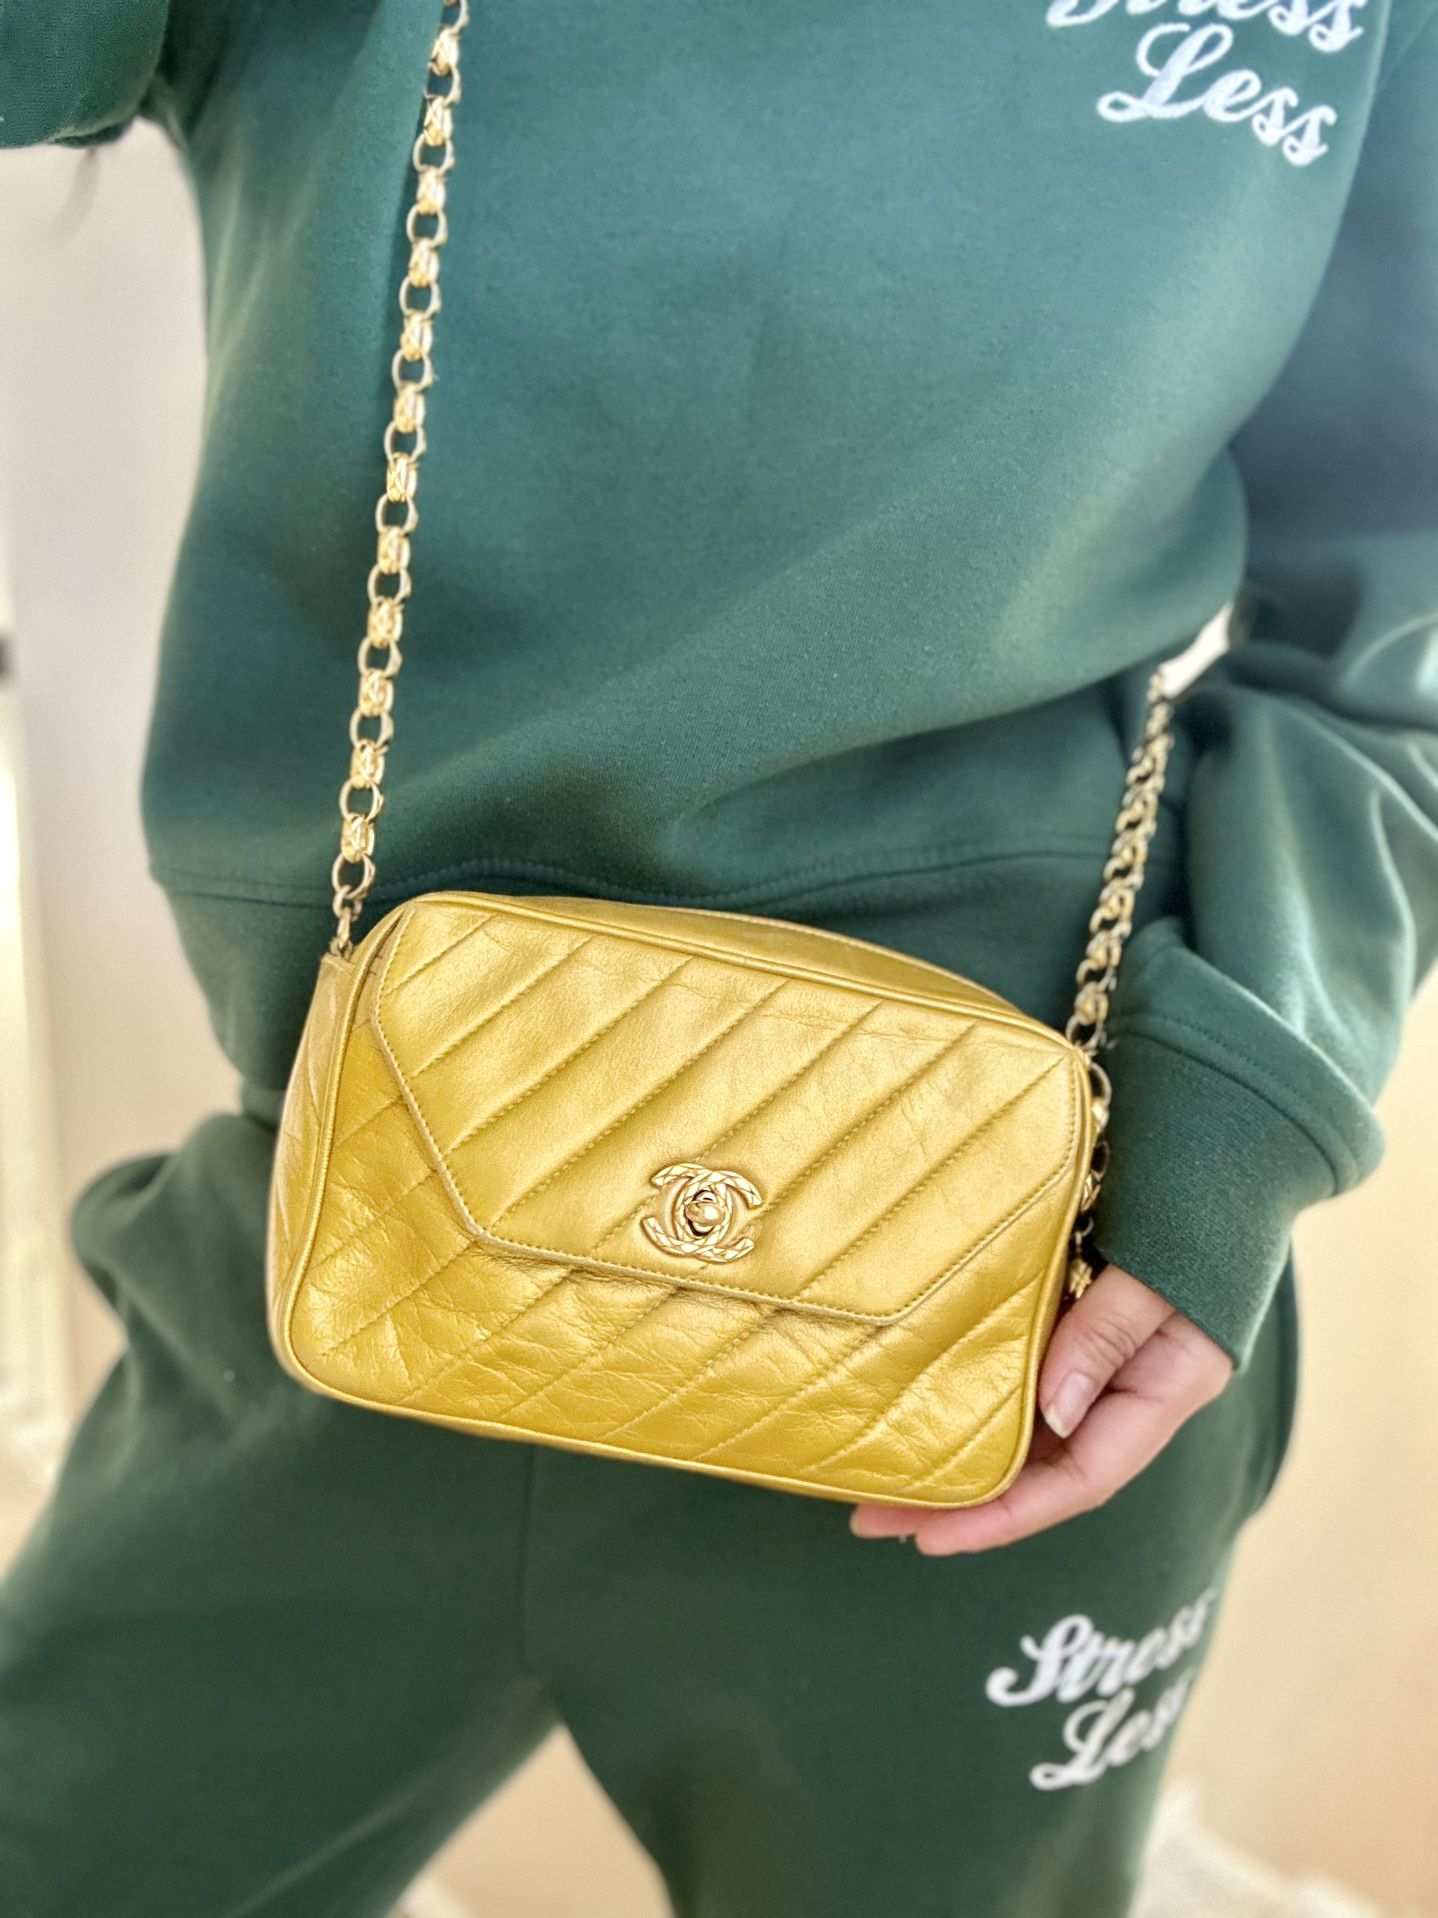 Chanel Camera Gold Bag